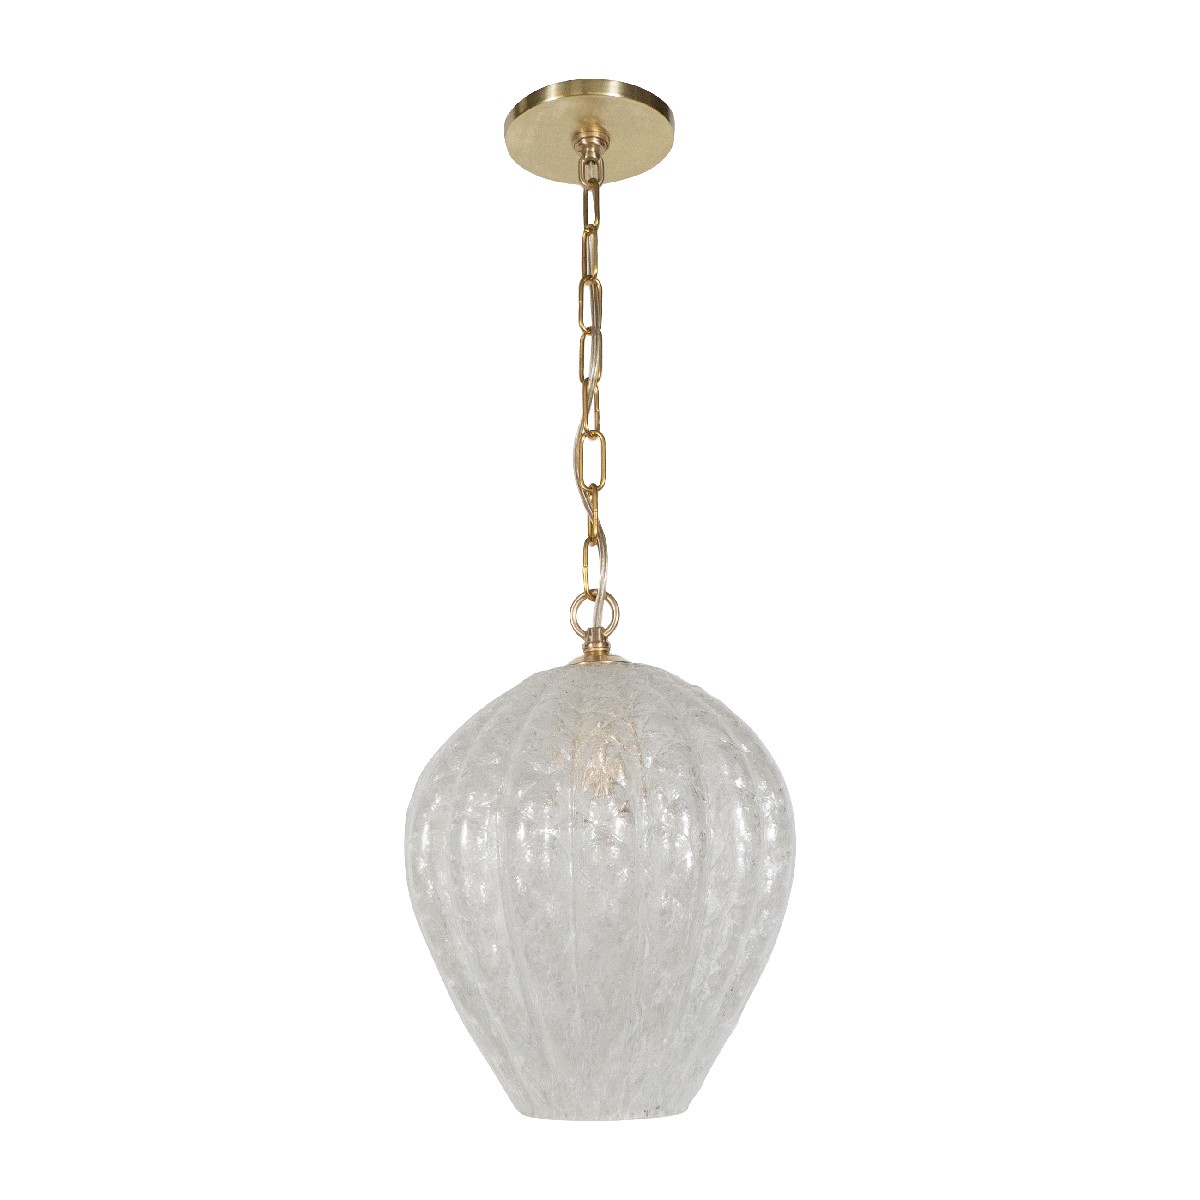 Murano glass bulb form pendant ceiling fixture